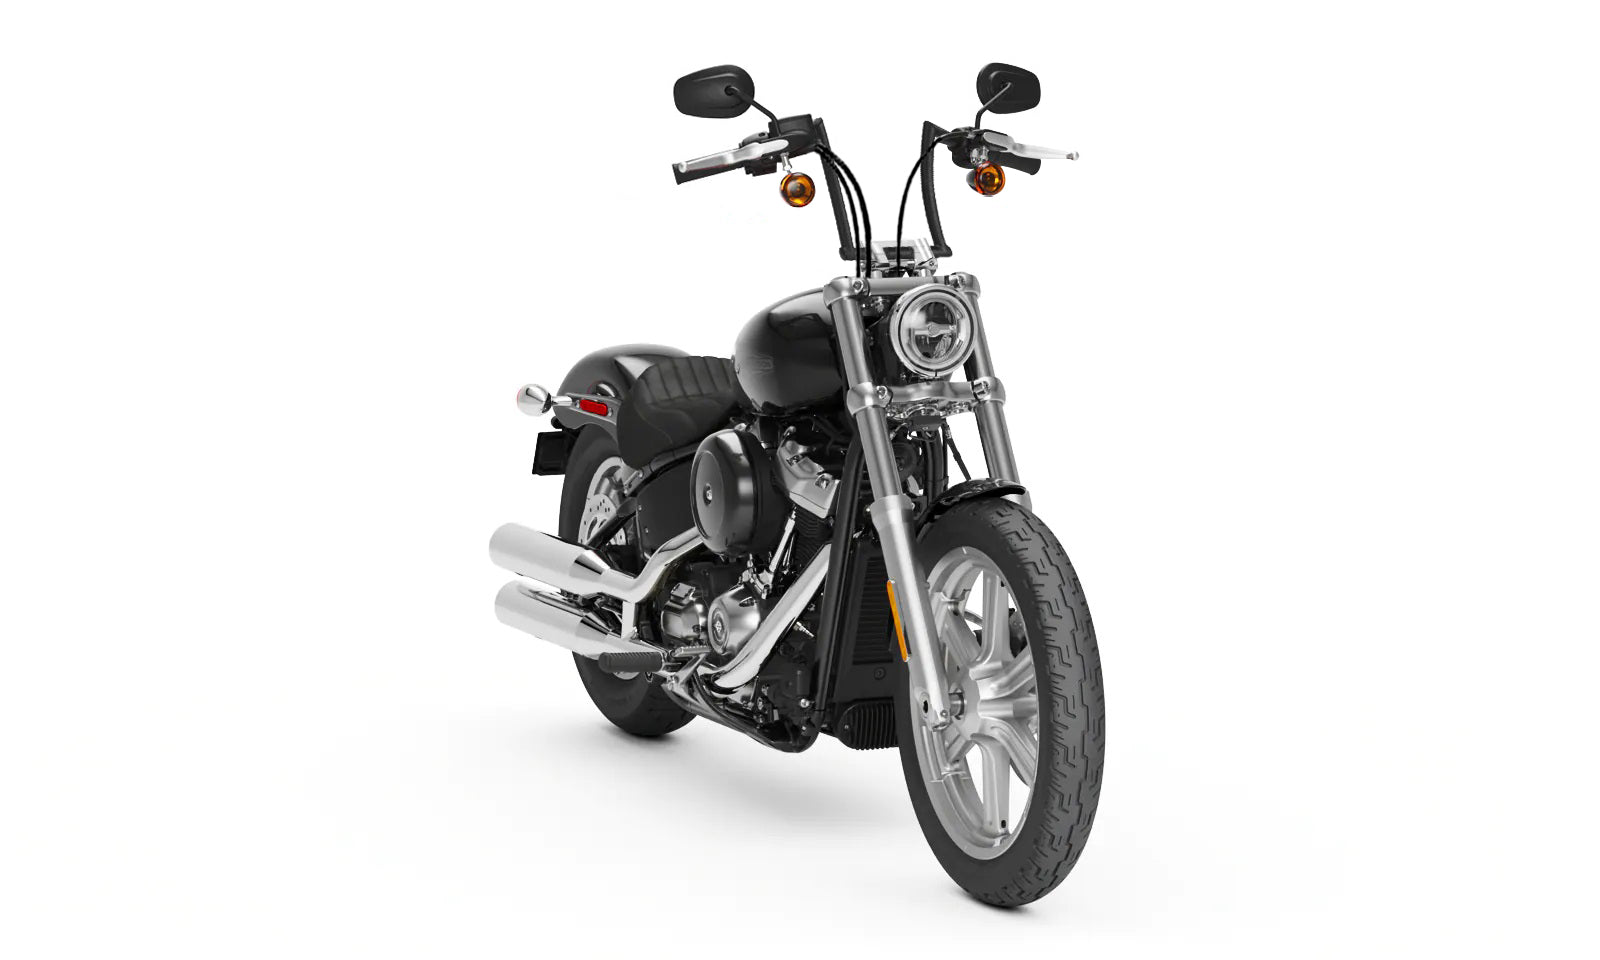 Viking Iron Born 9" Handlebar for Harley Softail Slim FLS Matte Black Bag on Bike View @expand